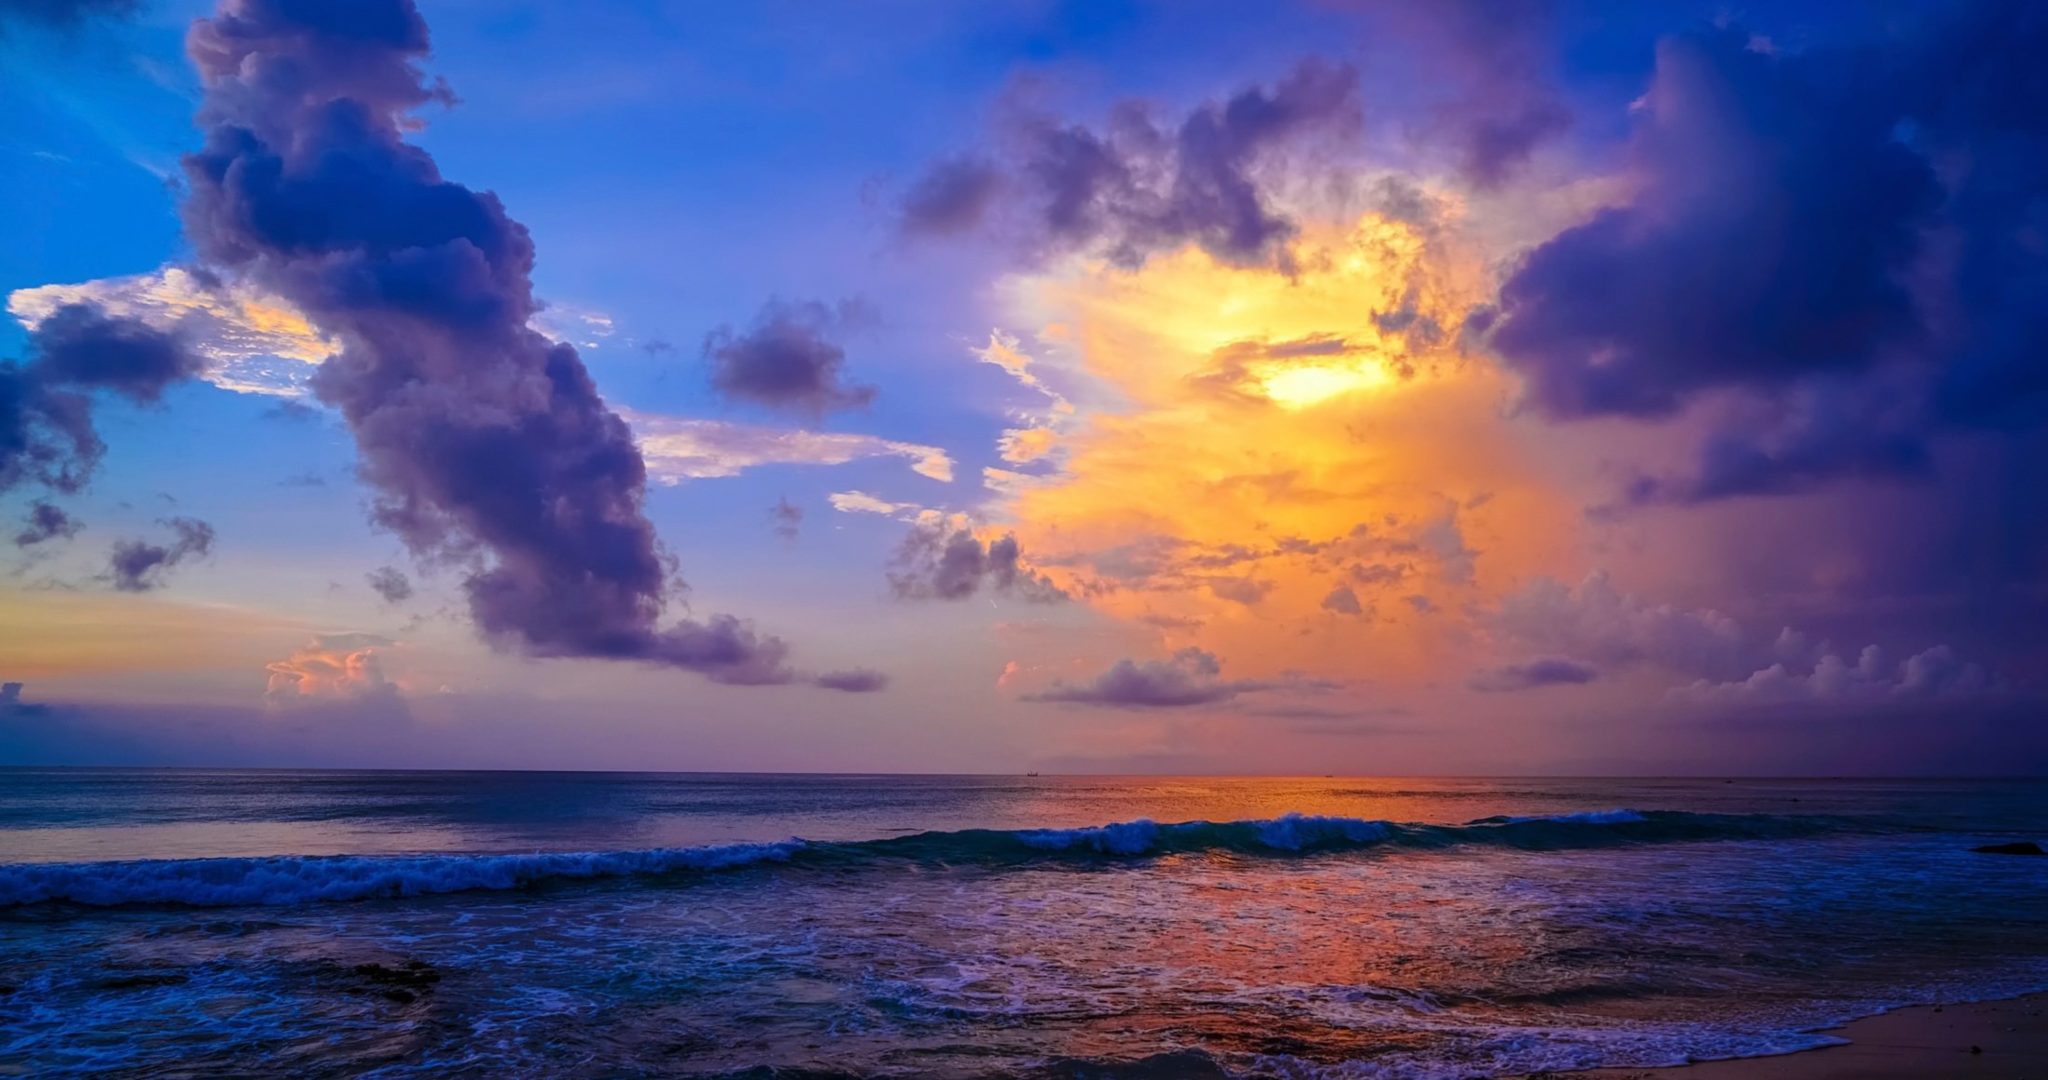 Sunset Bali Beach Ultra Hd Wallpapers 4k Download Free - Dreamland Beach -  2048x1080 Wallpaper 